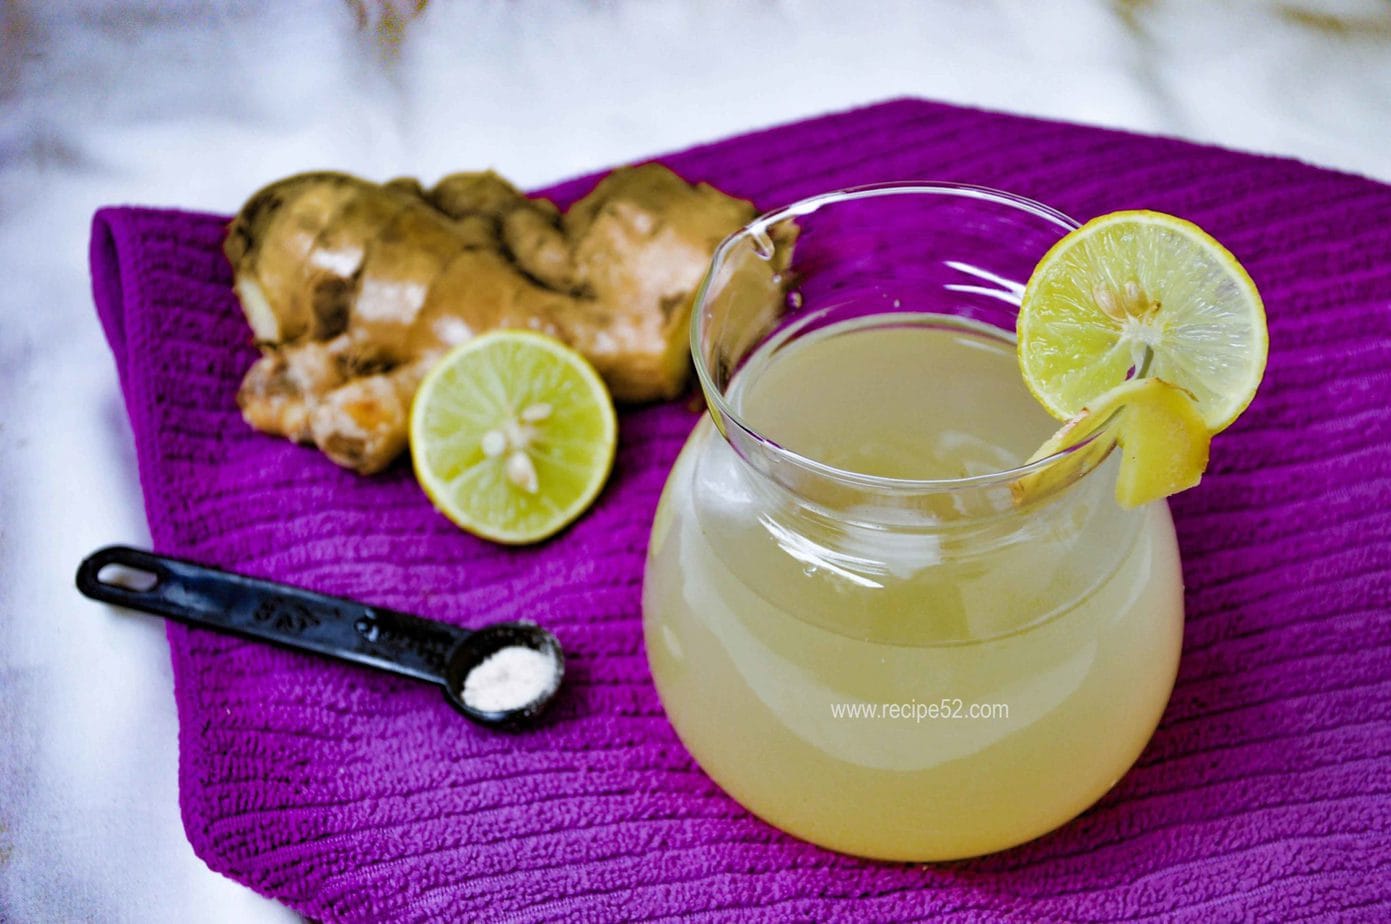 ginger lemonade served with fresh ginger and lemon on the side.